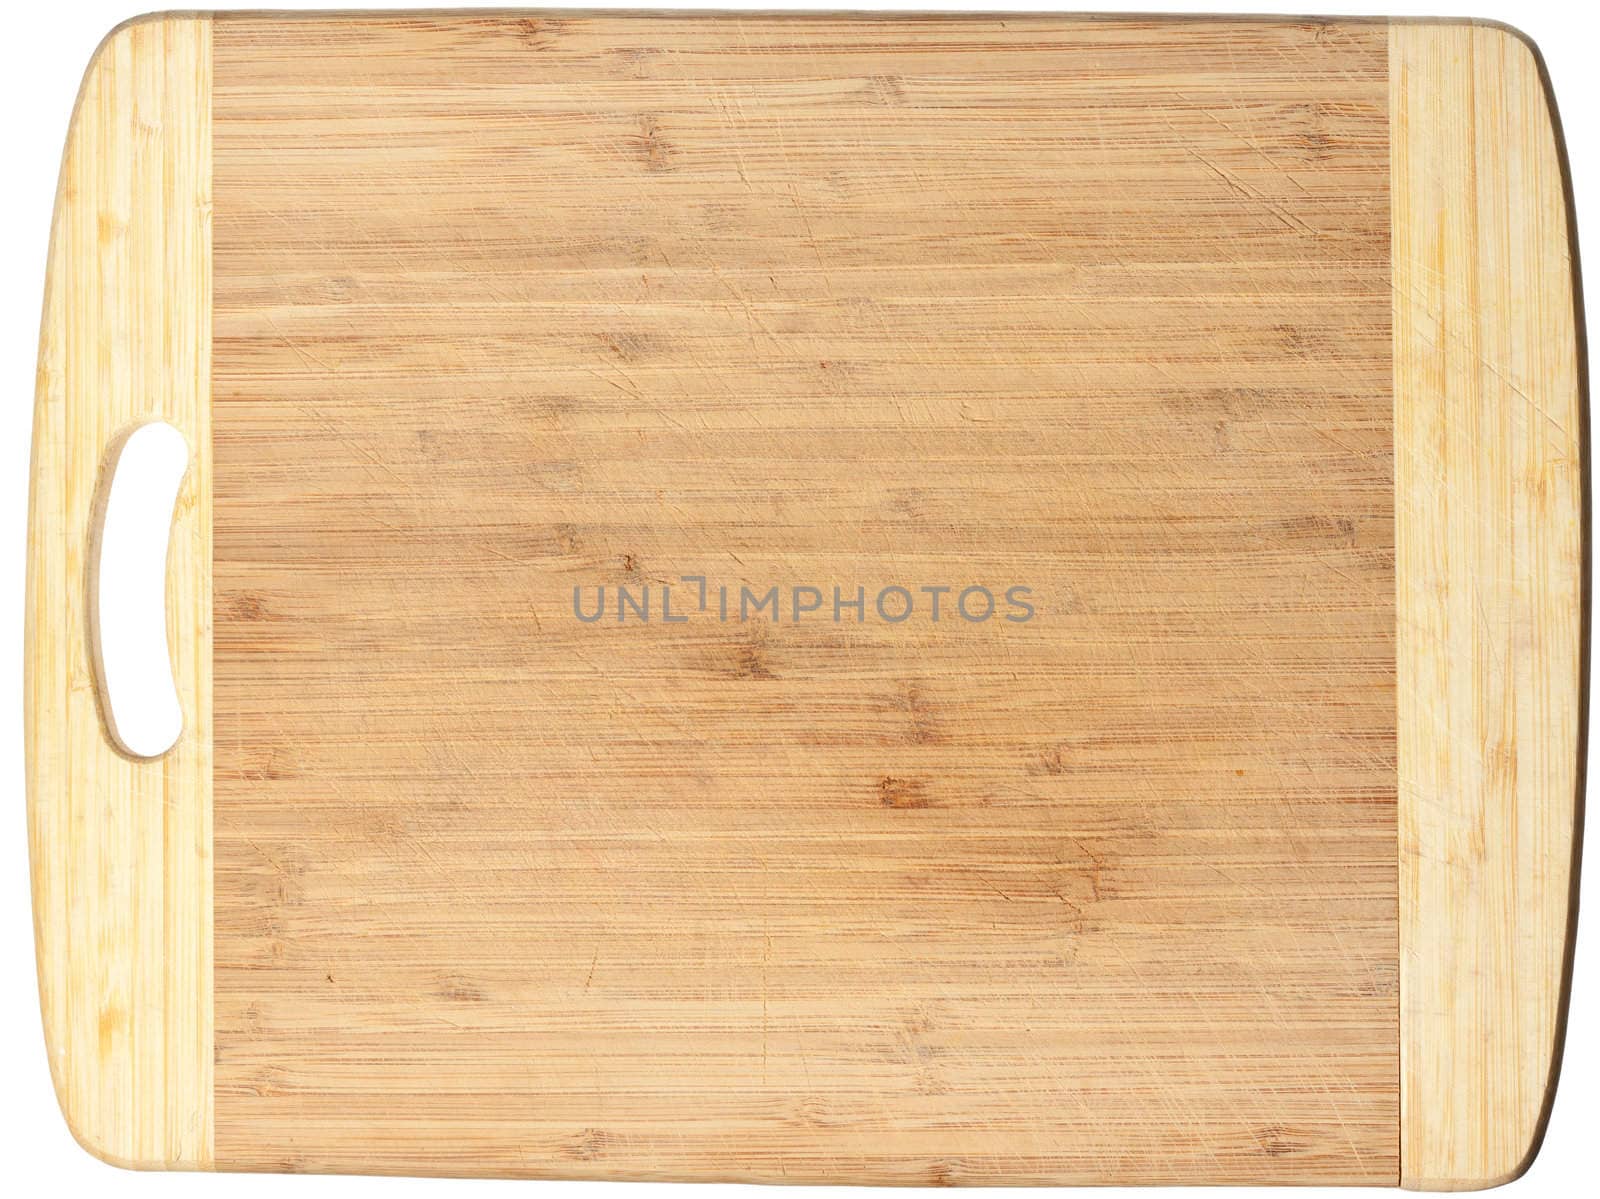 Isolated wooden cutting board by Jaykayl